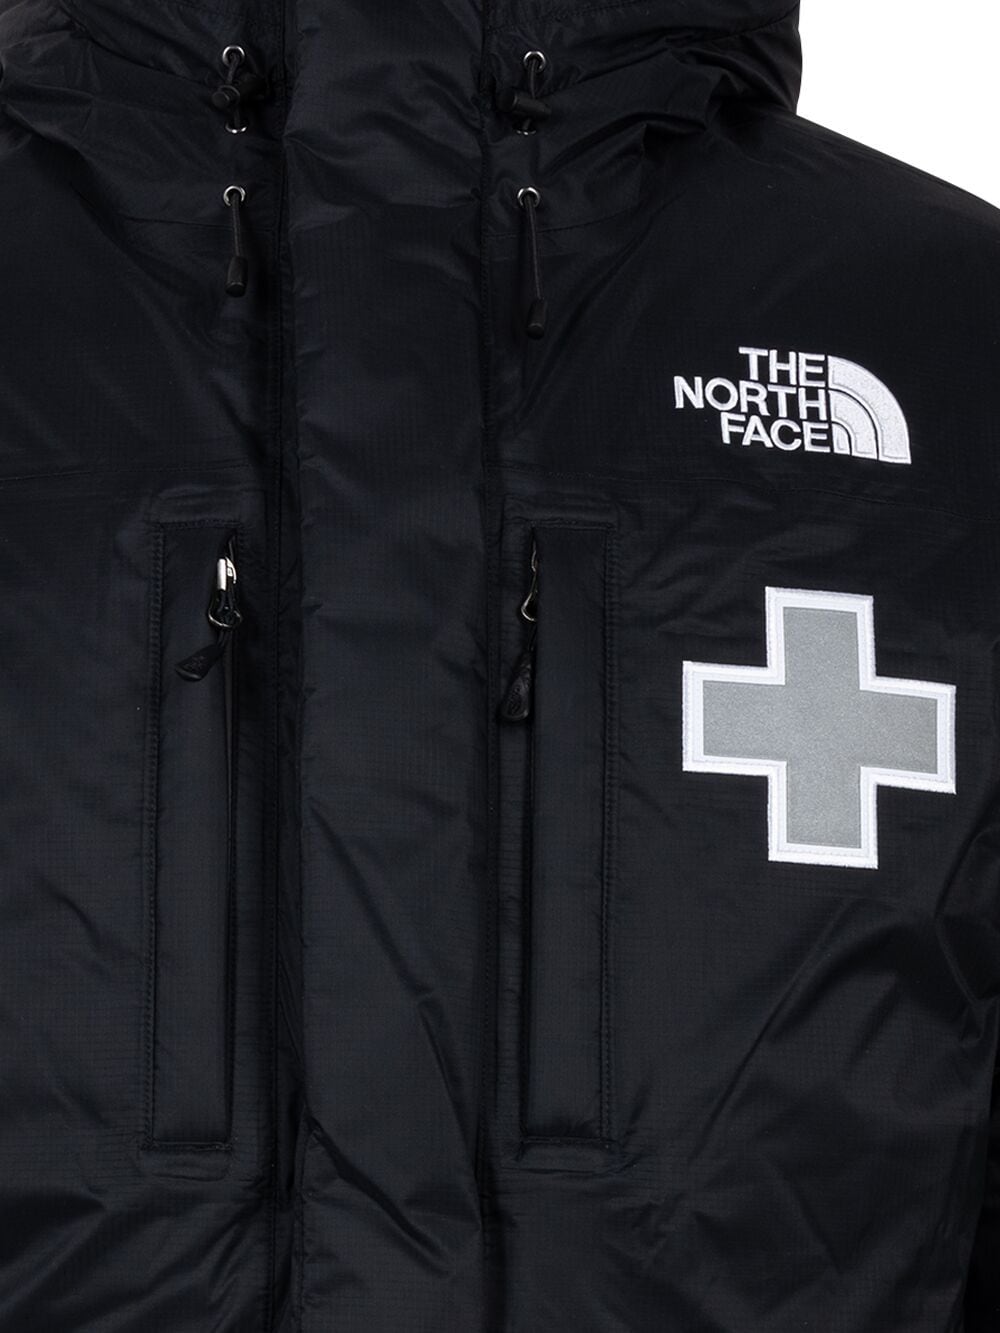 Supreme x The North Face Summit Series Rescue Baltoro Jacket